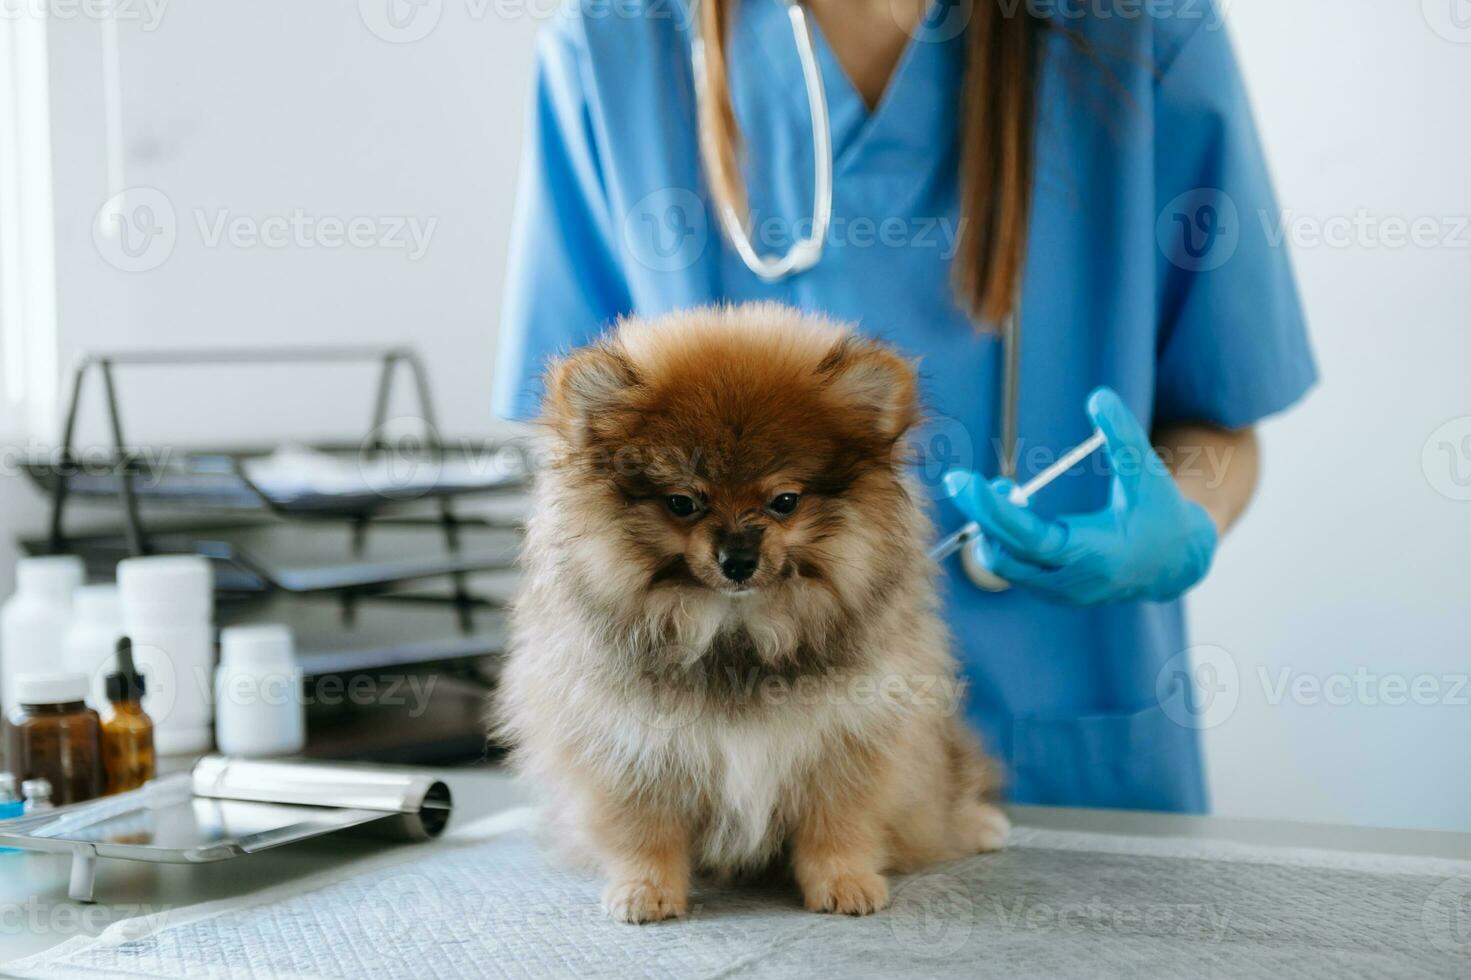 doctors are examining him. Veterinary medicine concept. Pomeranian photo